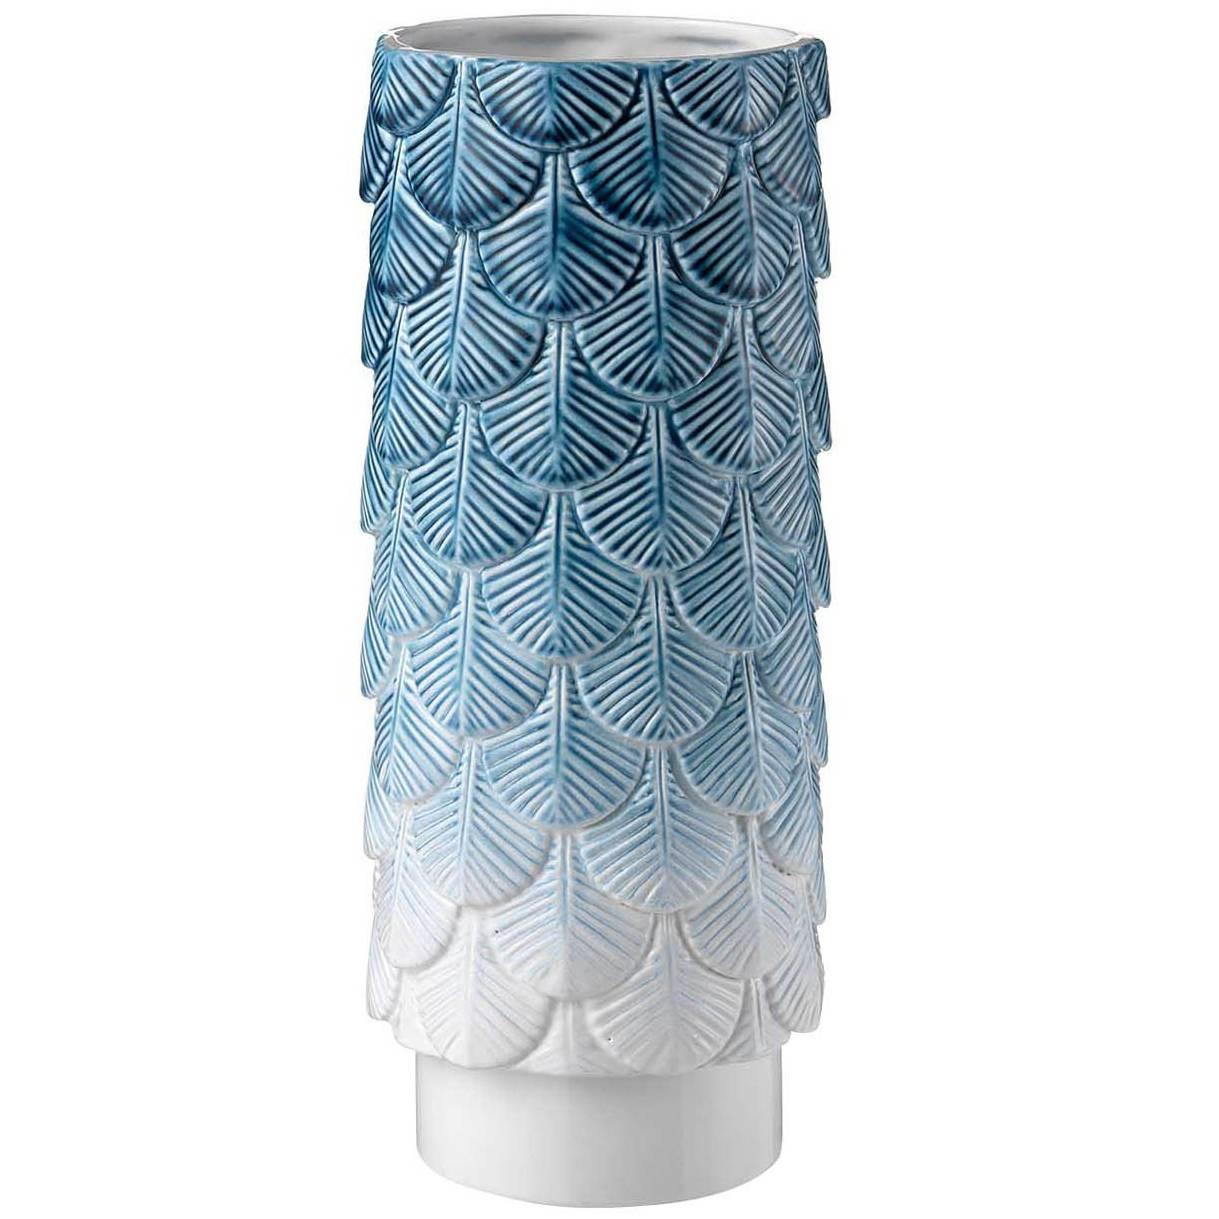 White and Blue Plumage Vase